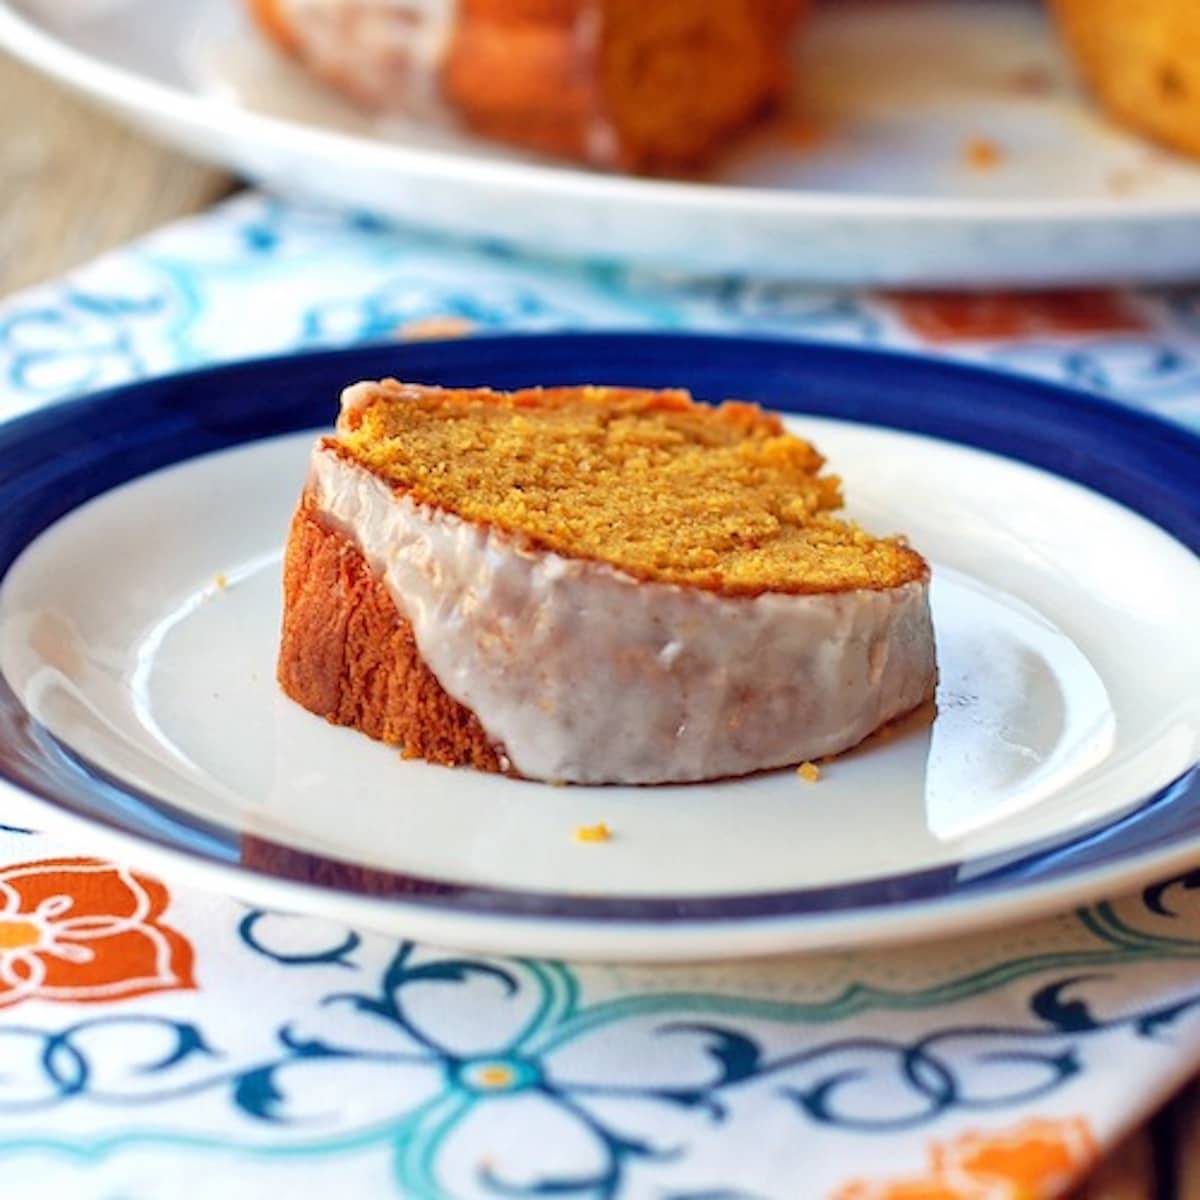 Pumpkin bundt cake with cinnamon glaze on a white plate on a colorful napkin.